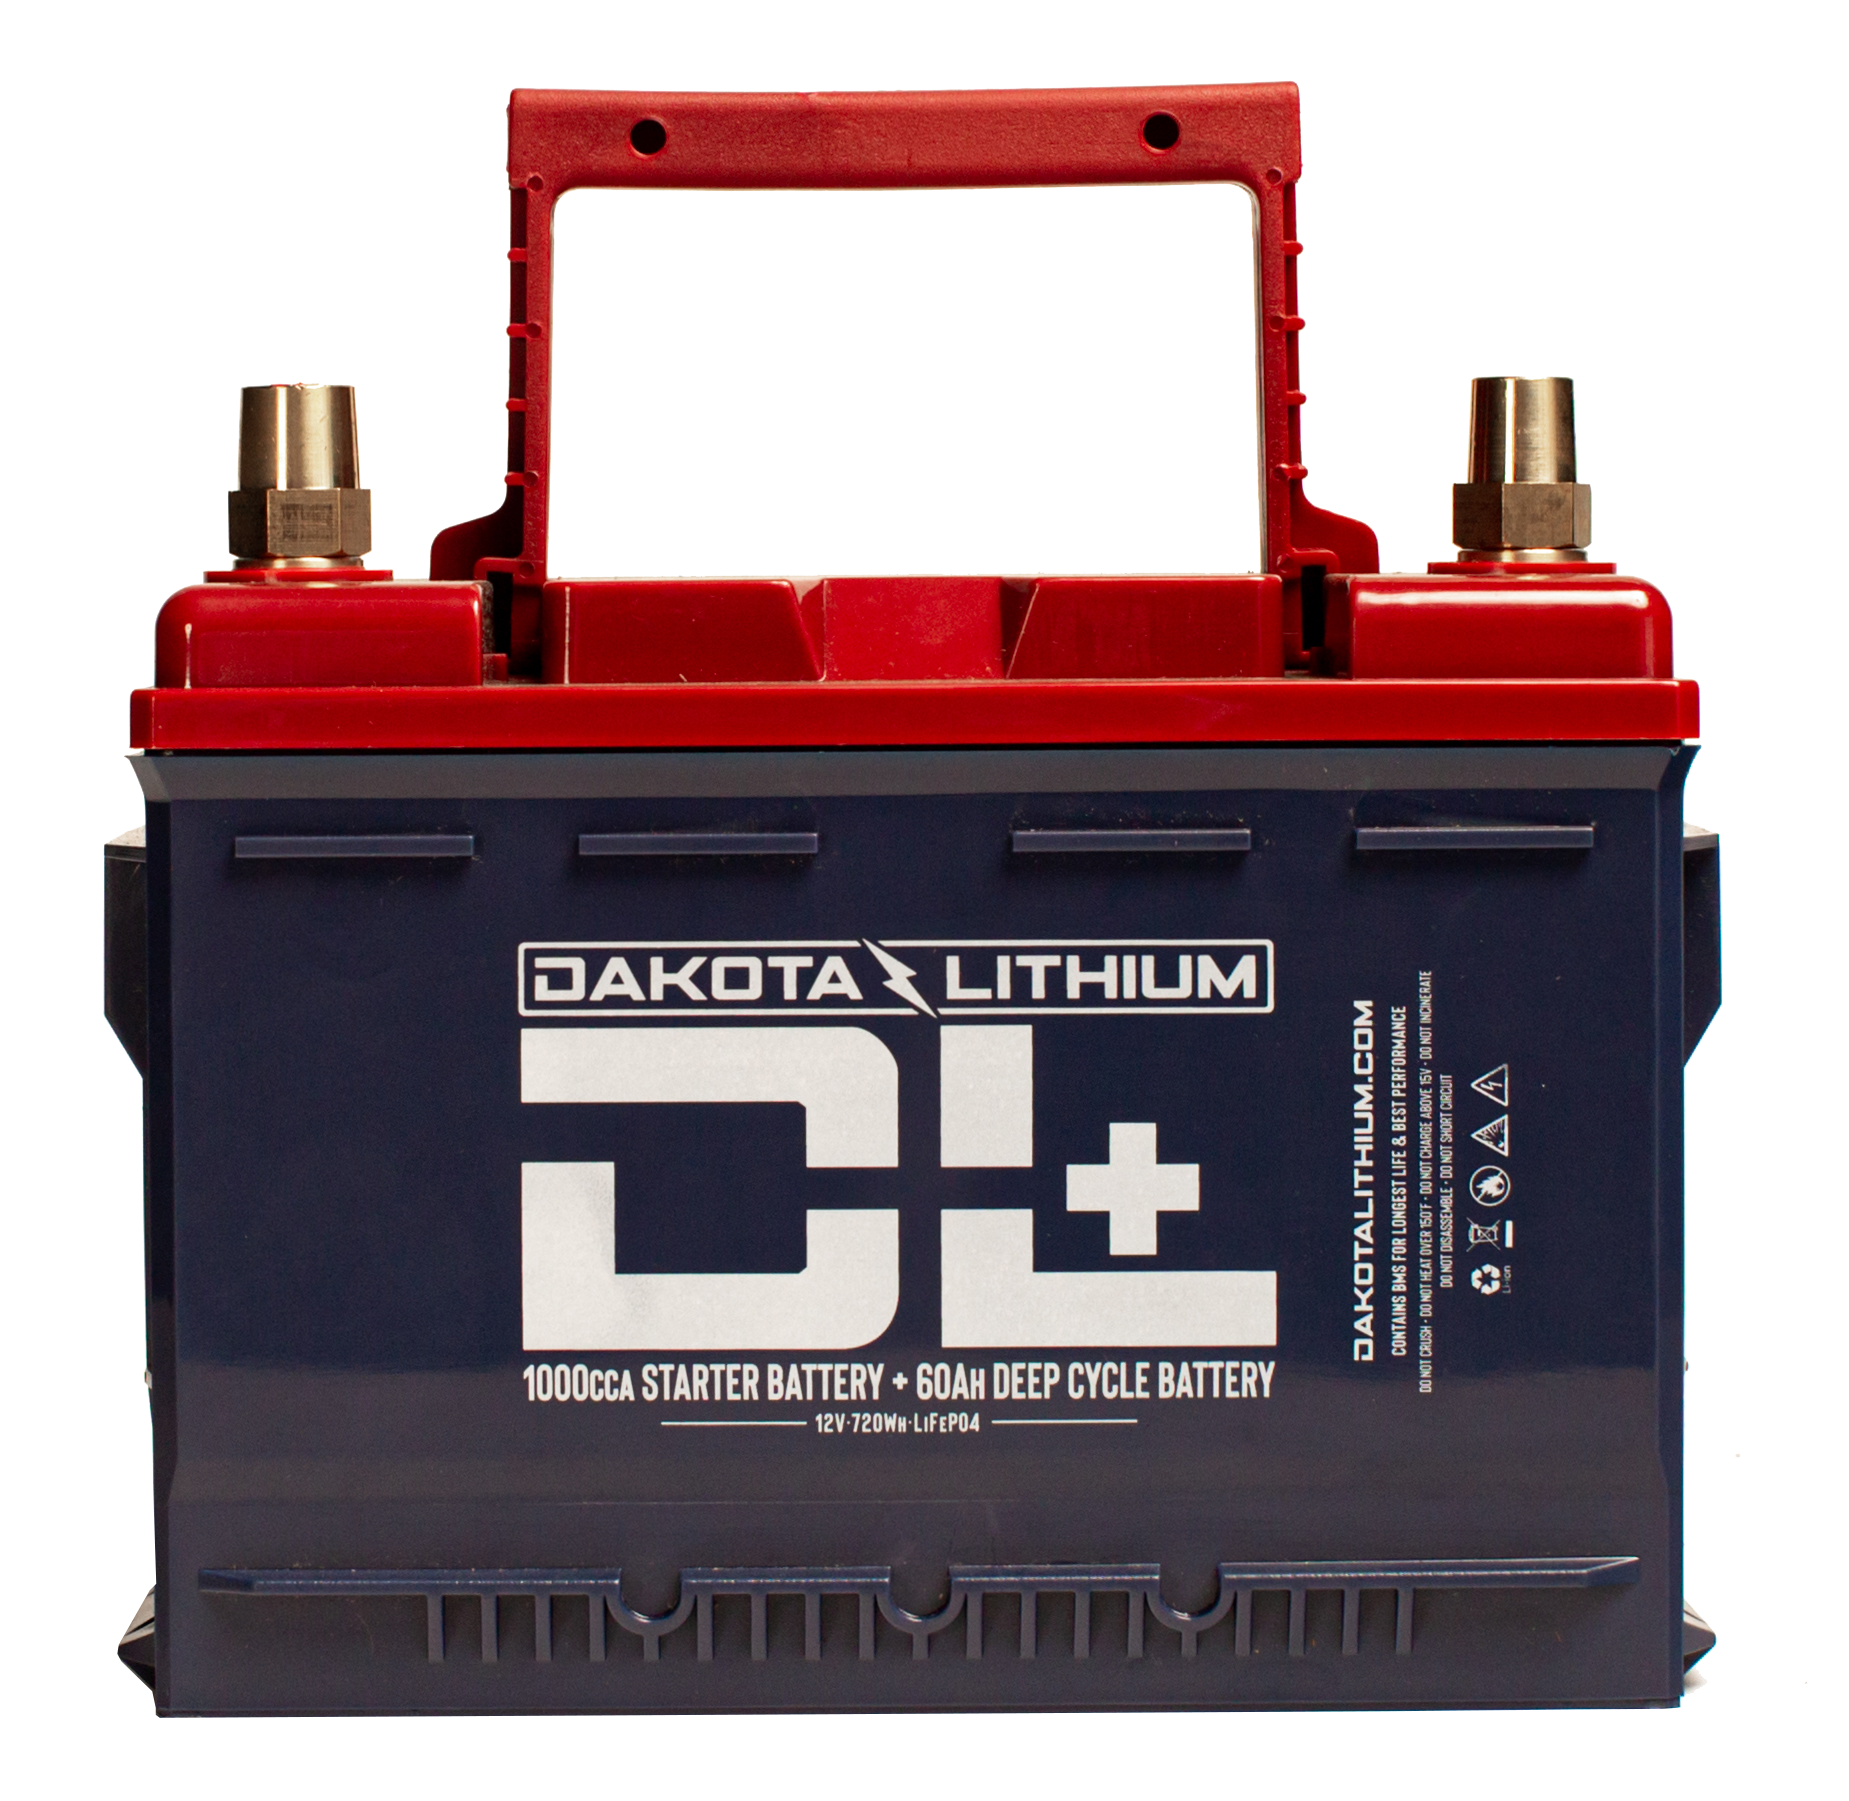 Dakota Lithium Plus DL+ 12V 60Ah Dual Purpose 1000CCA Starter Battery Plus Deep Cycle Performance